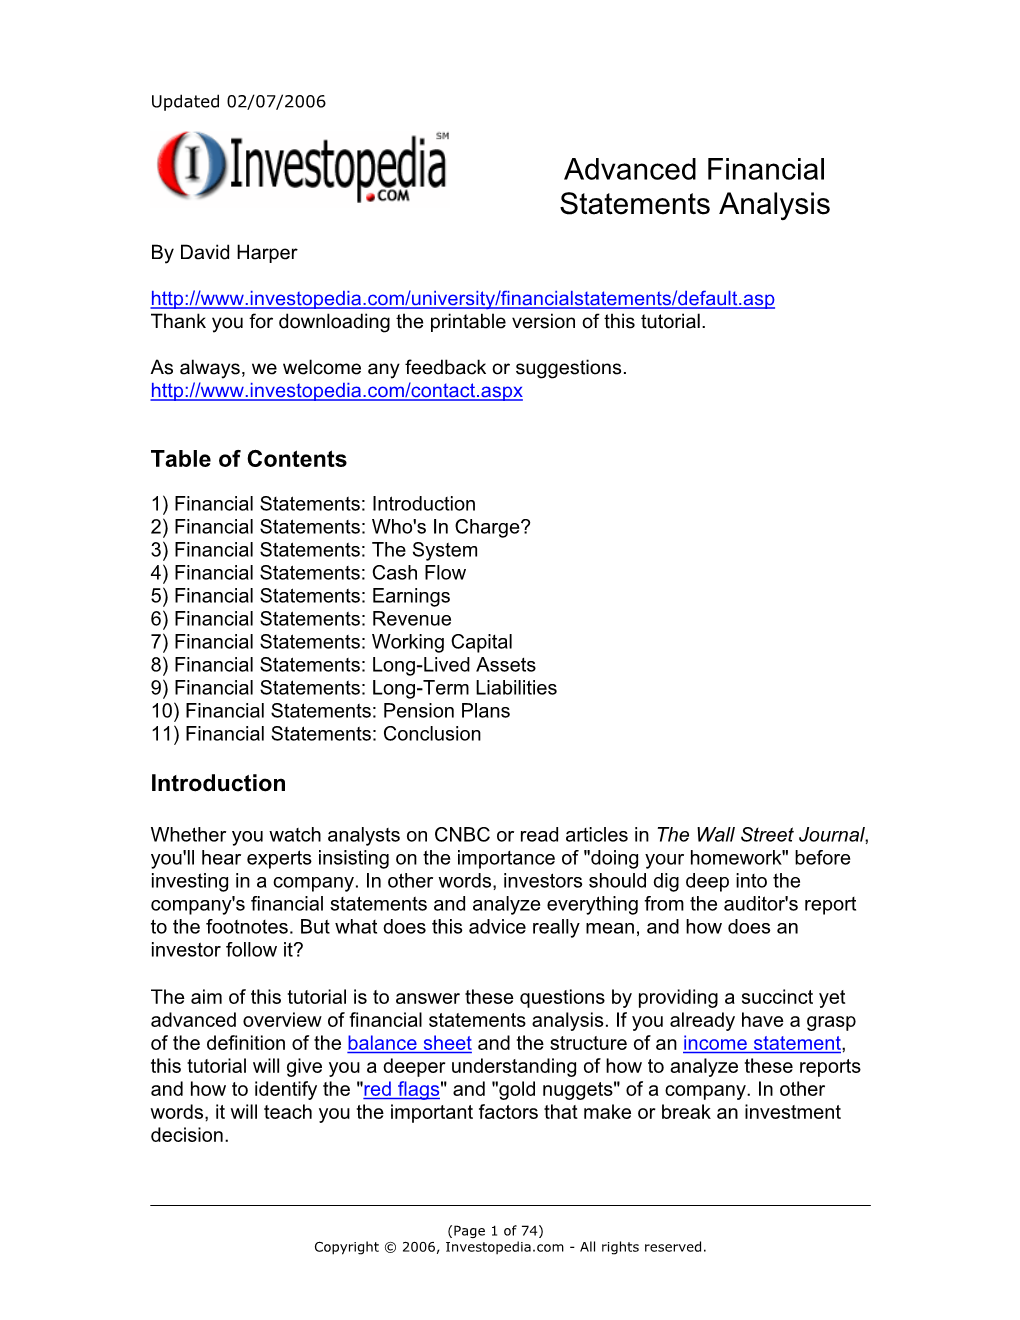 Advanced Financial Statements Analysis